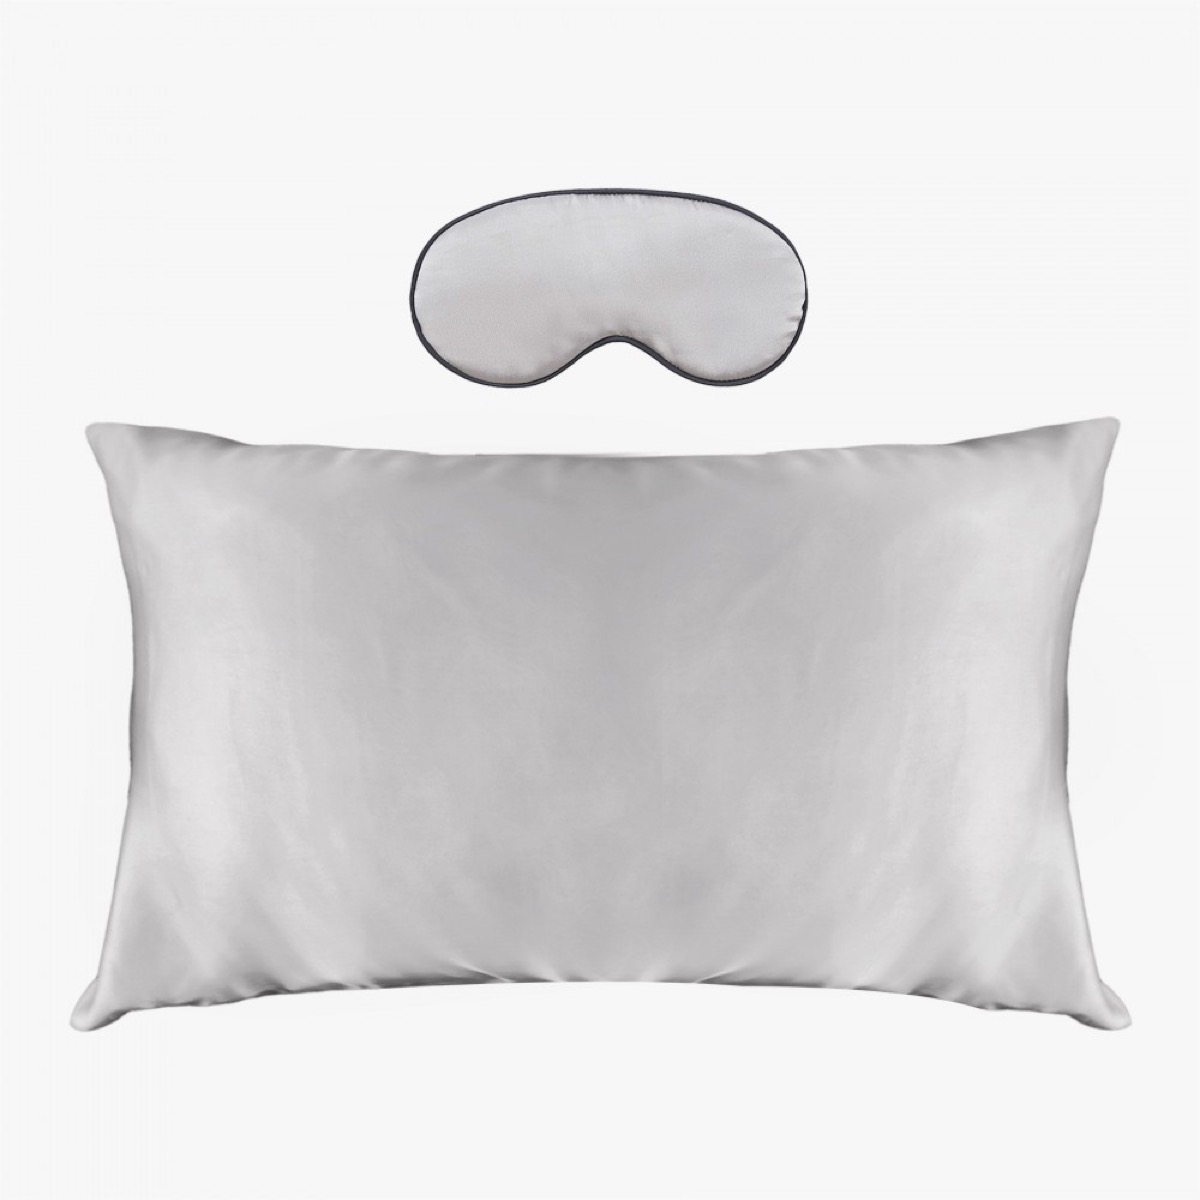 Silver silk pillowcase and eye mask, white background